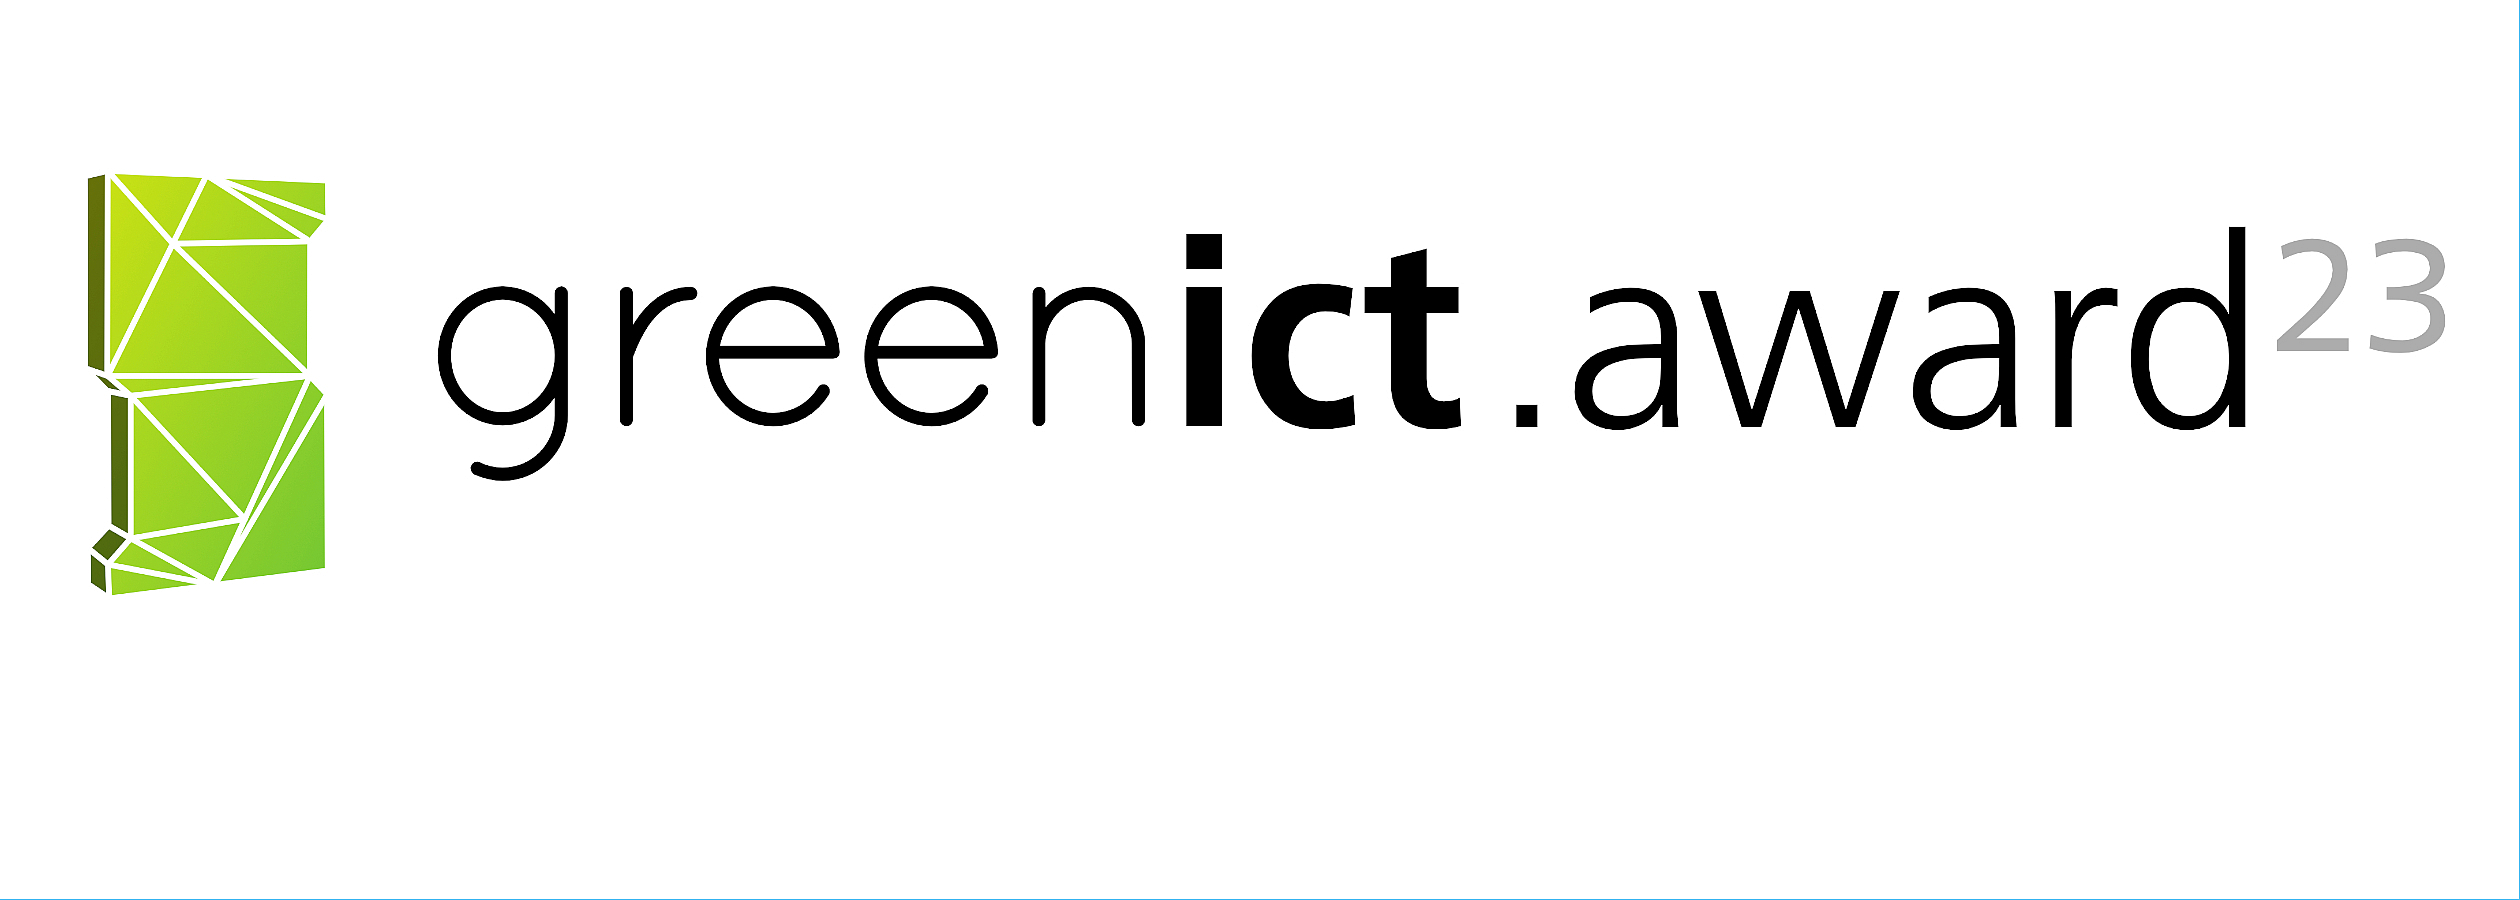 green ict award 2023 Logo